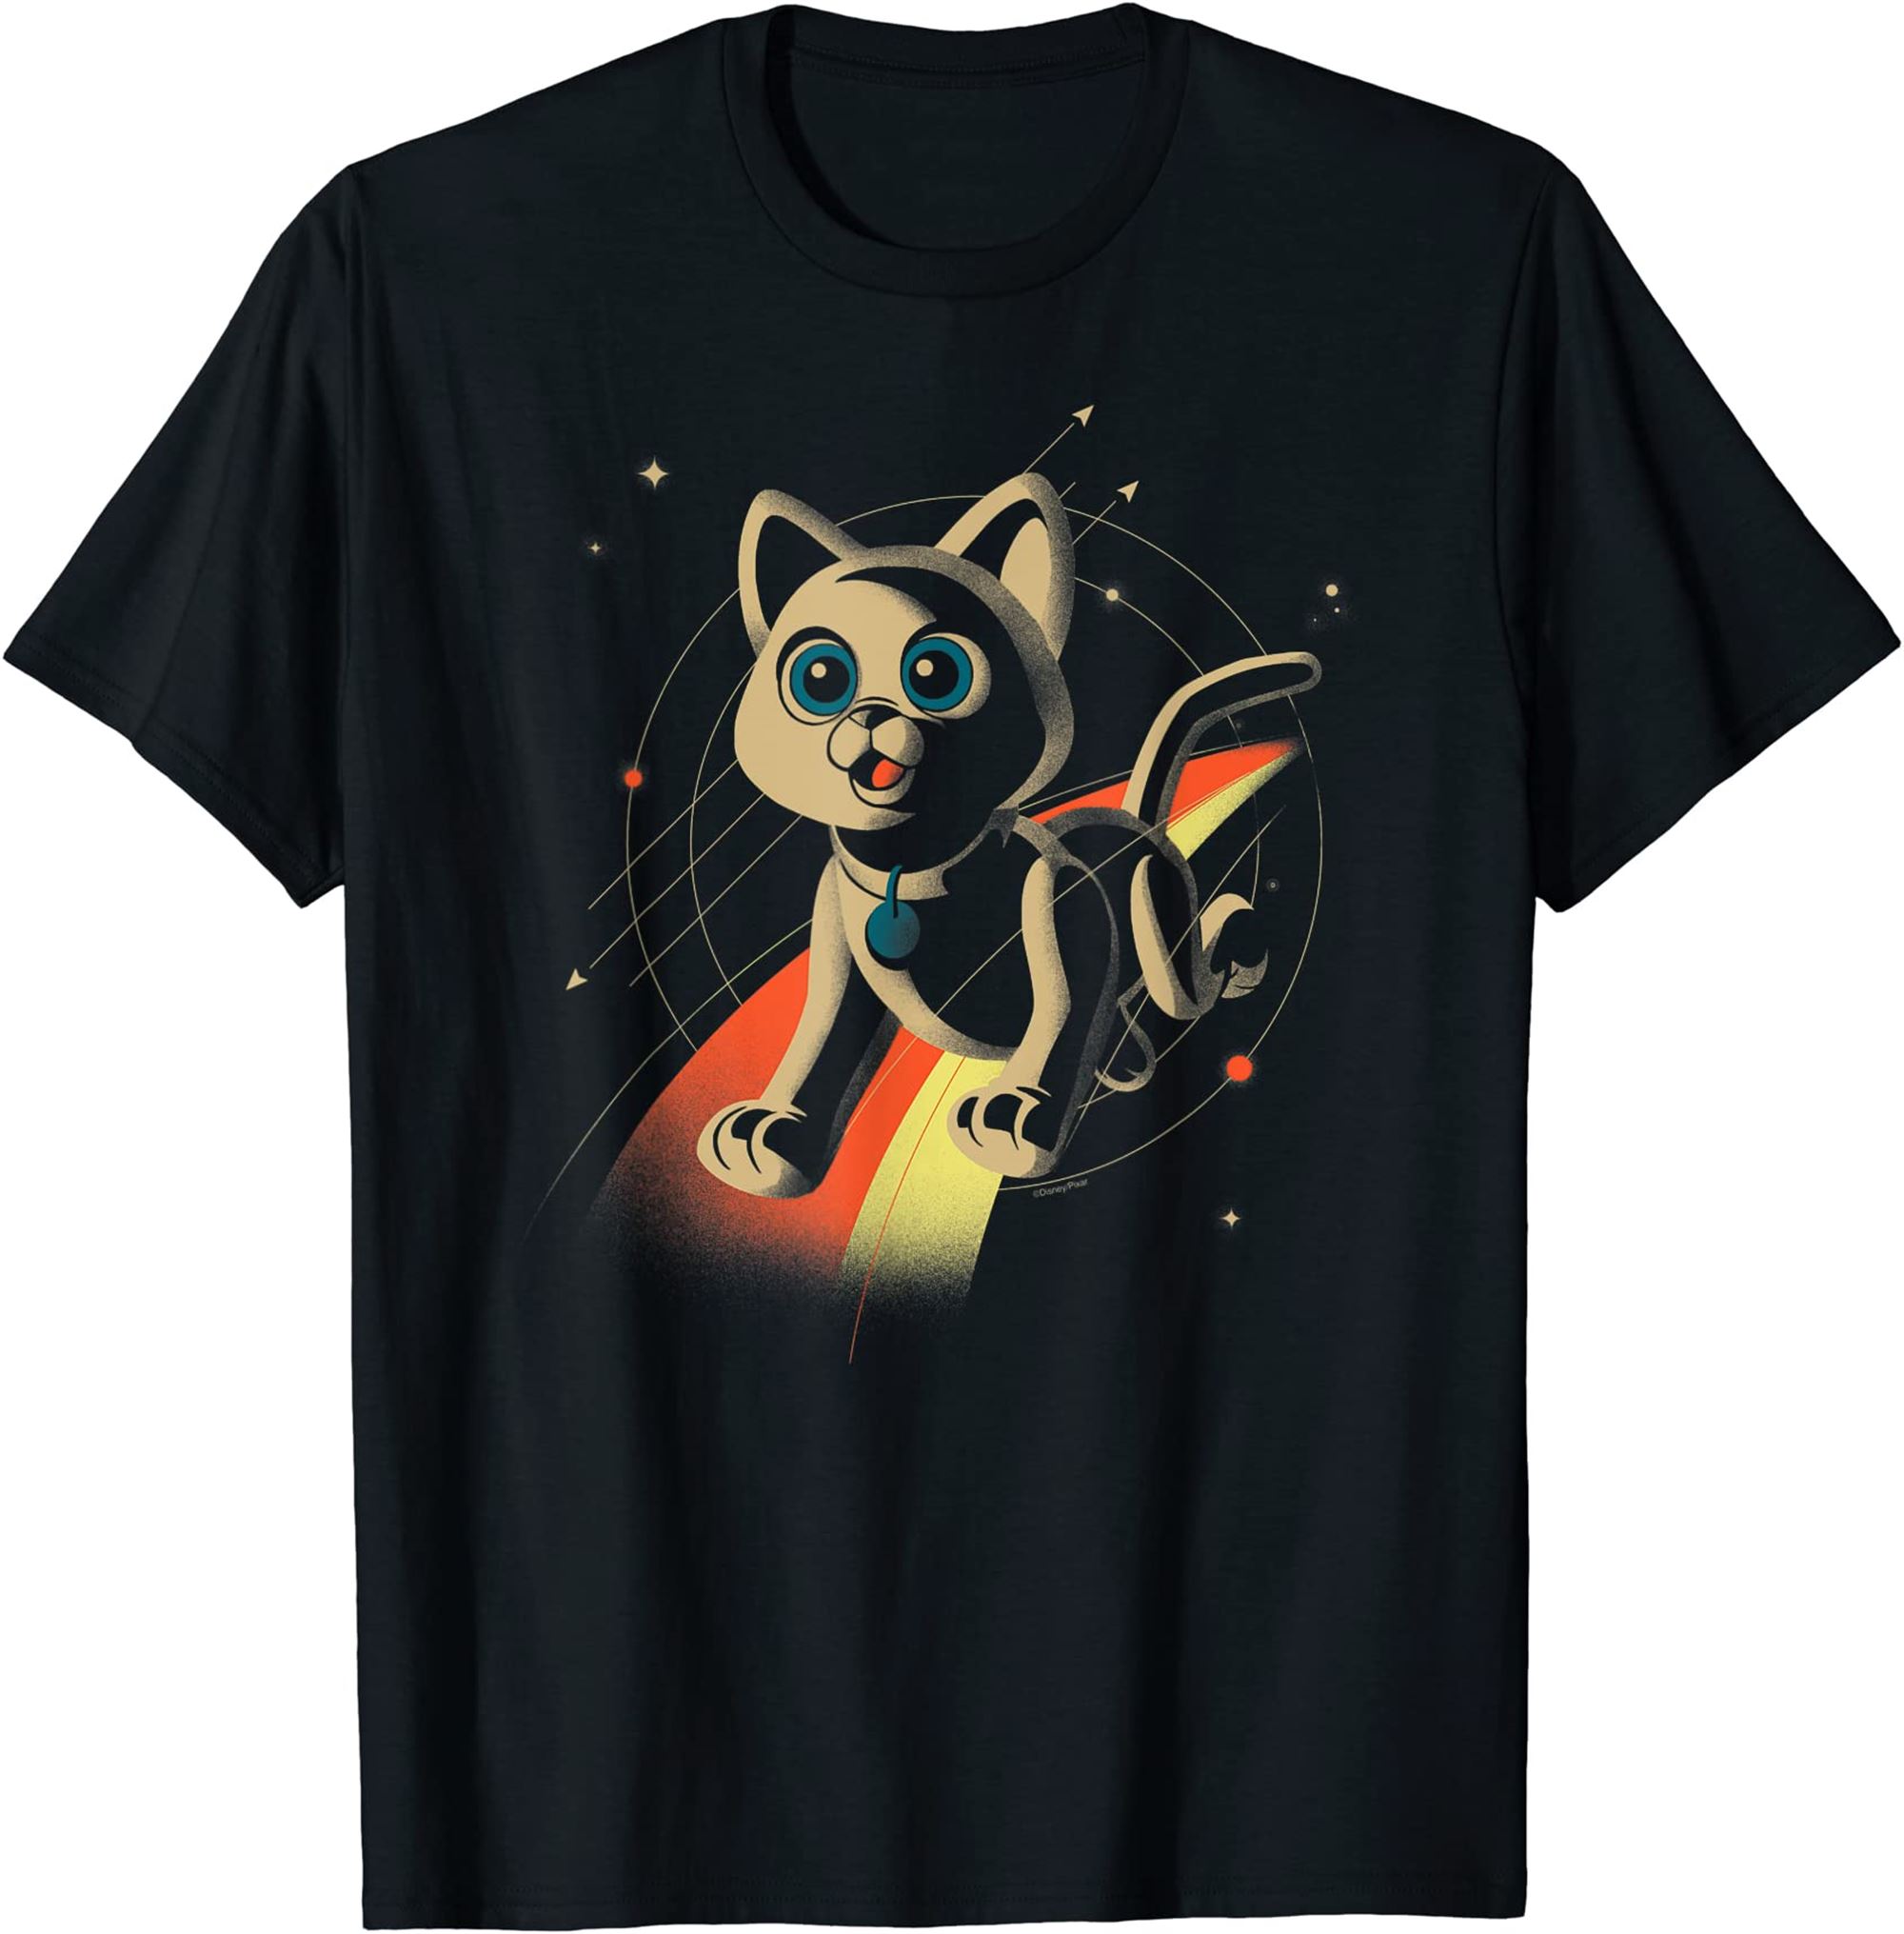 Disney Pixar Lightyear Sox T-shirt Size Up To 5xl